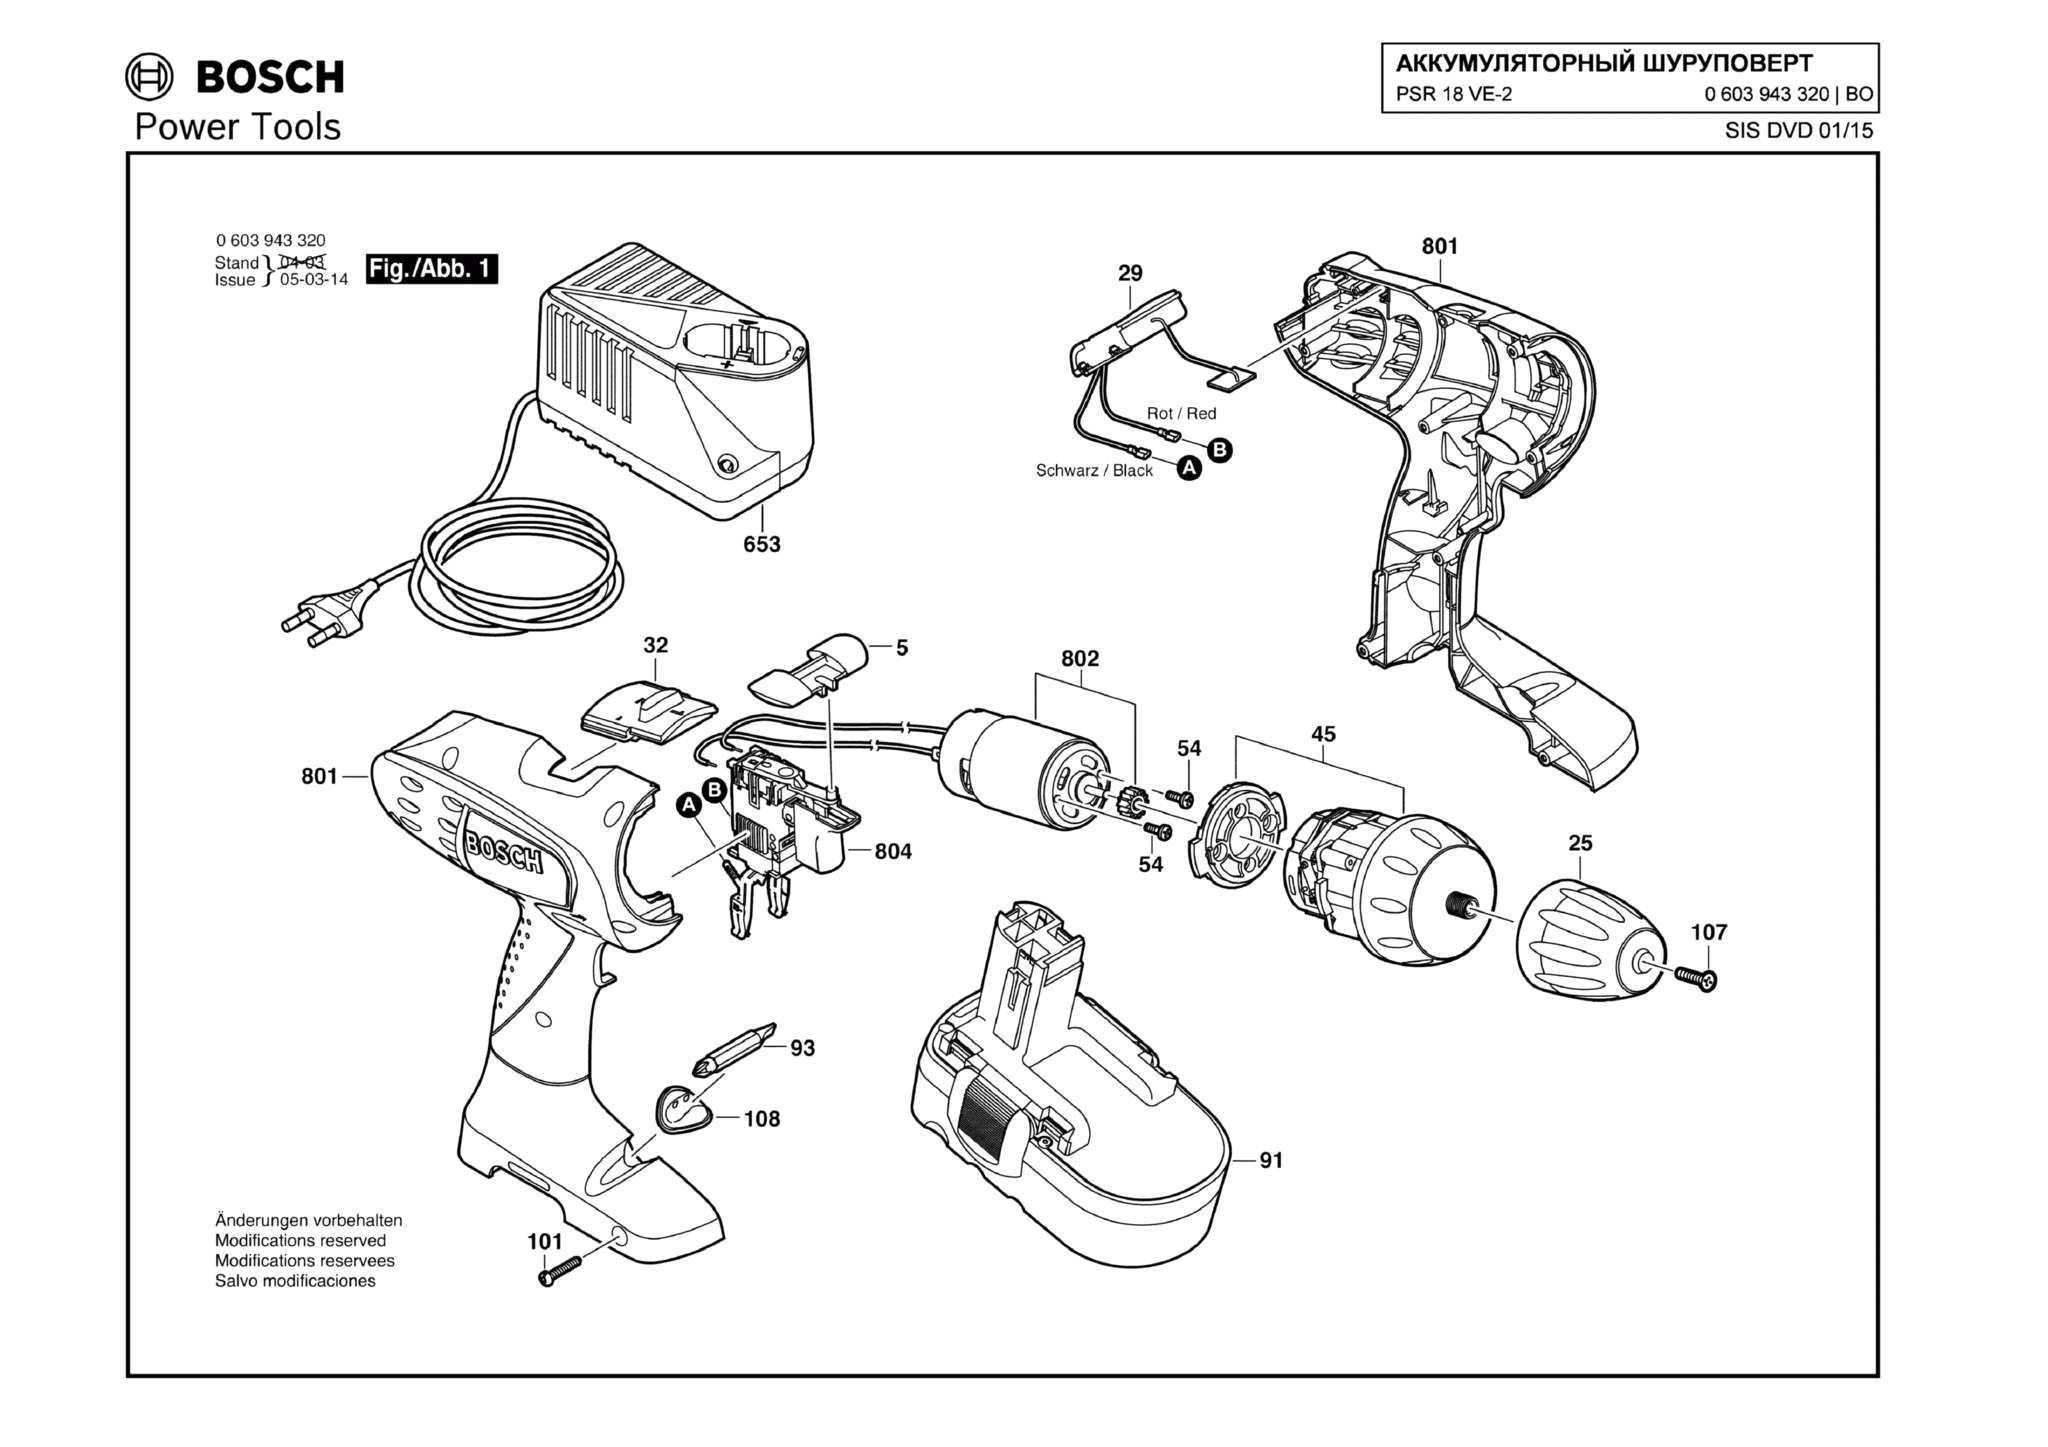 Запчасти, схема и деталировка Bosch PSR 18 VE-2 (ТИП 0603943320)